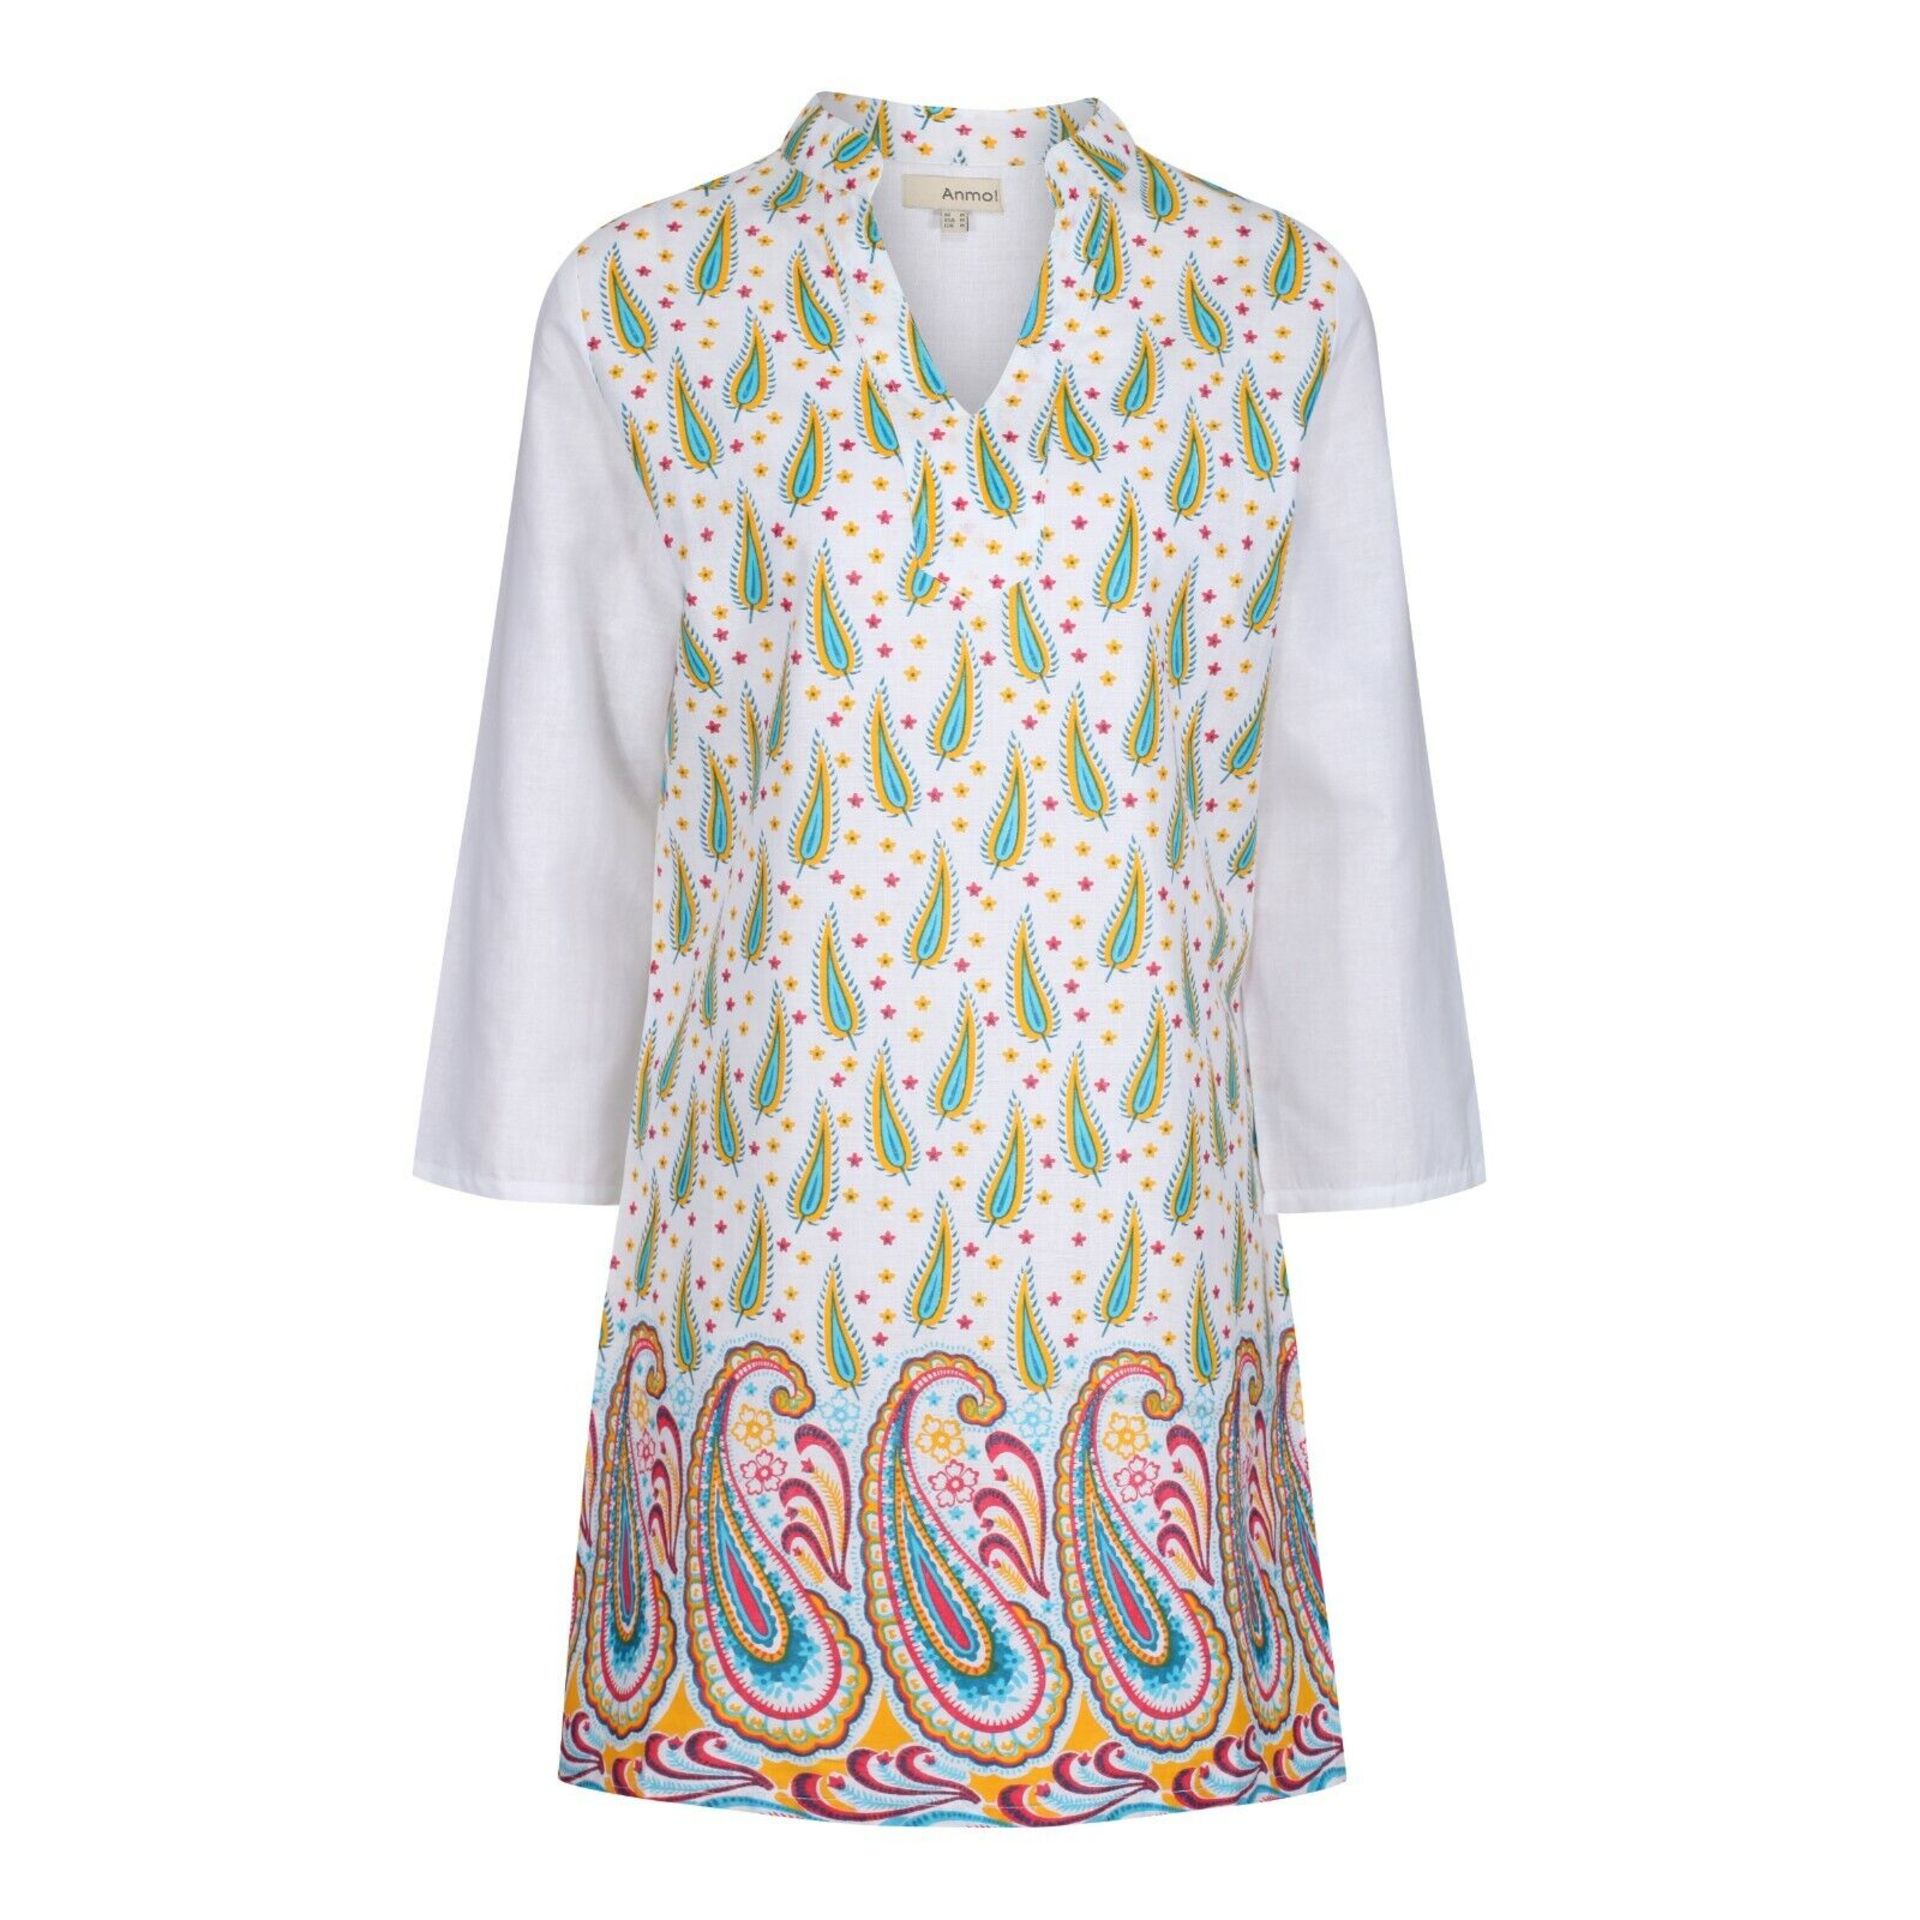 50 x New Women's Cotton Kaftan Tunics Summer Ladieswear Clothing Clothes Fashion - Image 3 of 7